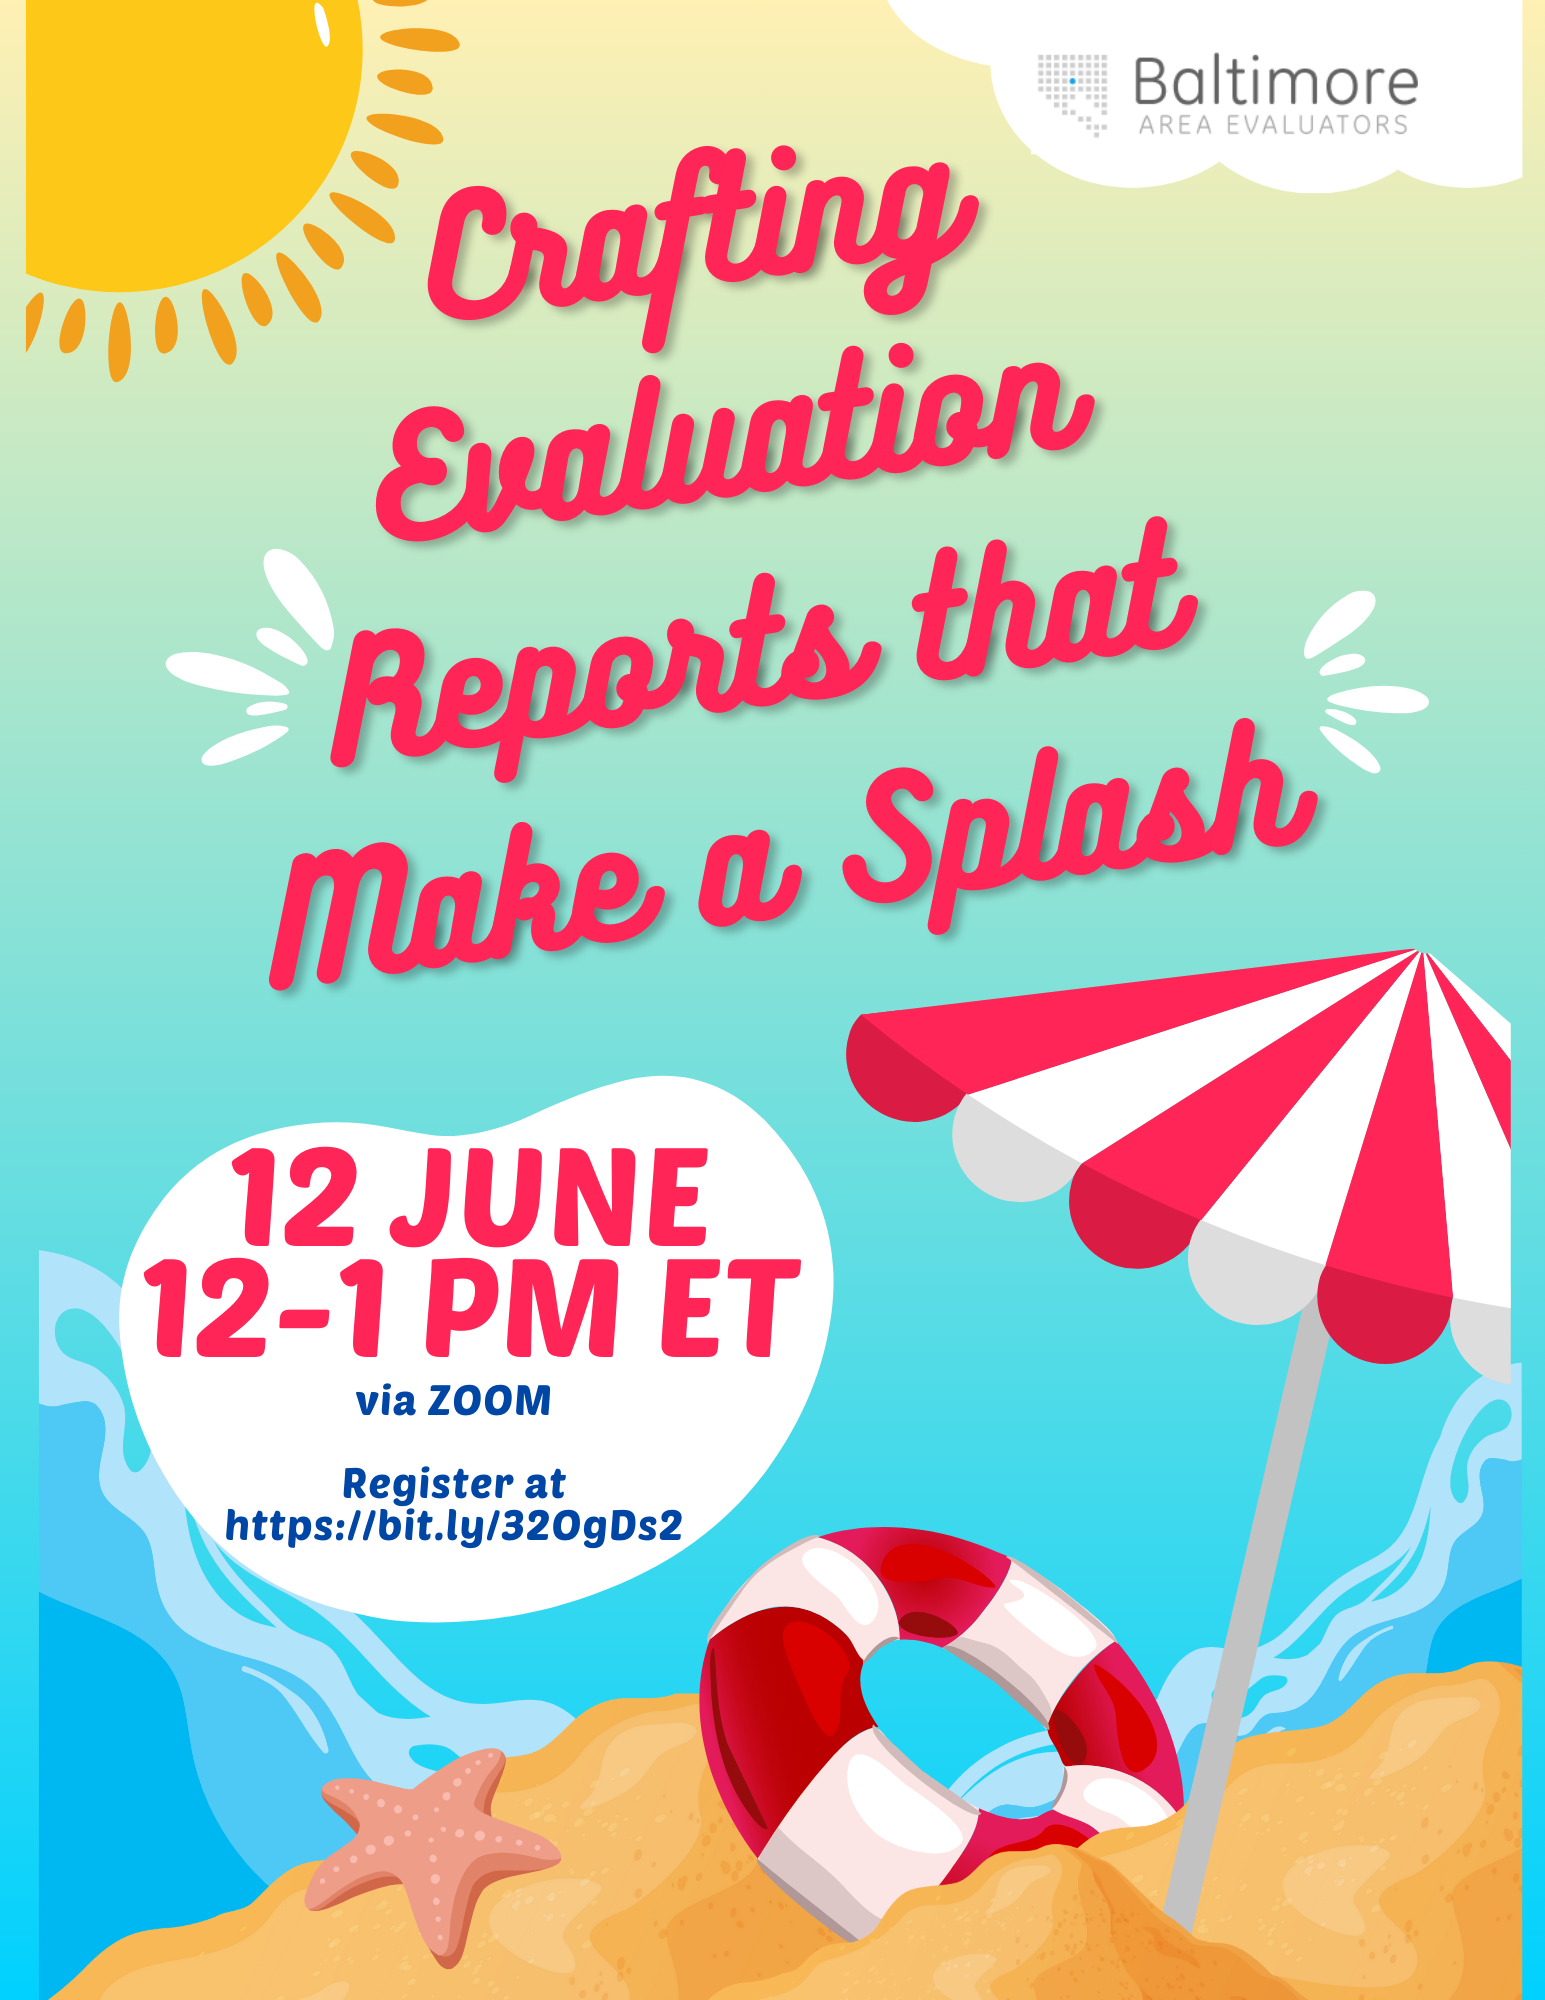 Baltimore Area Evaluators' Crafting evaluation reports that make a splash. 12 June, 12-1 PM ET via Zoom. Register at https://bit.ly/32OgDs2